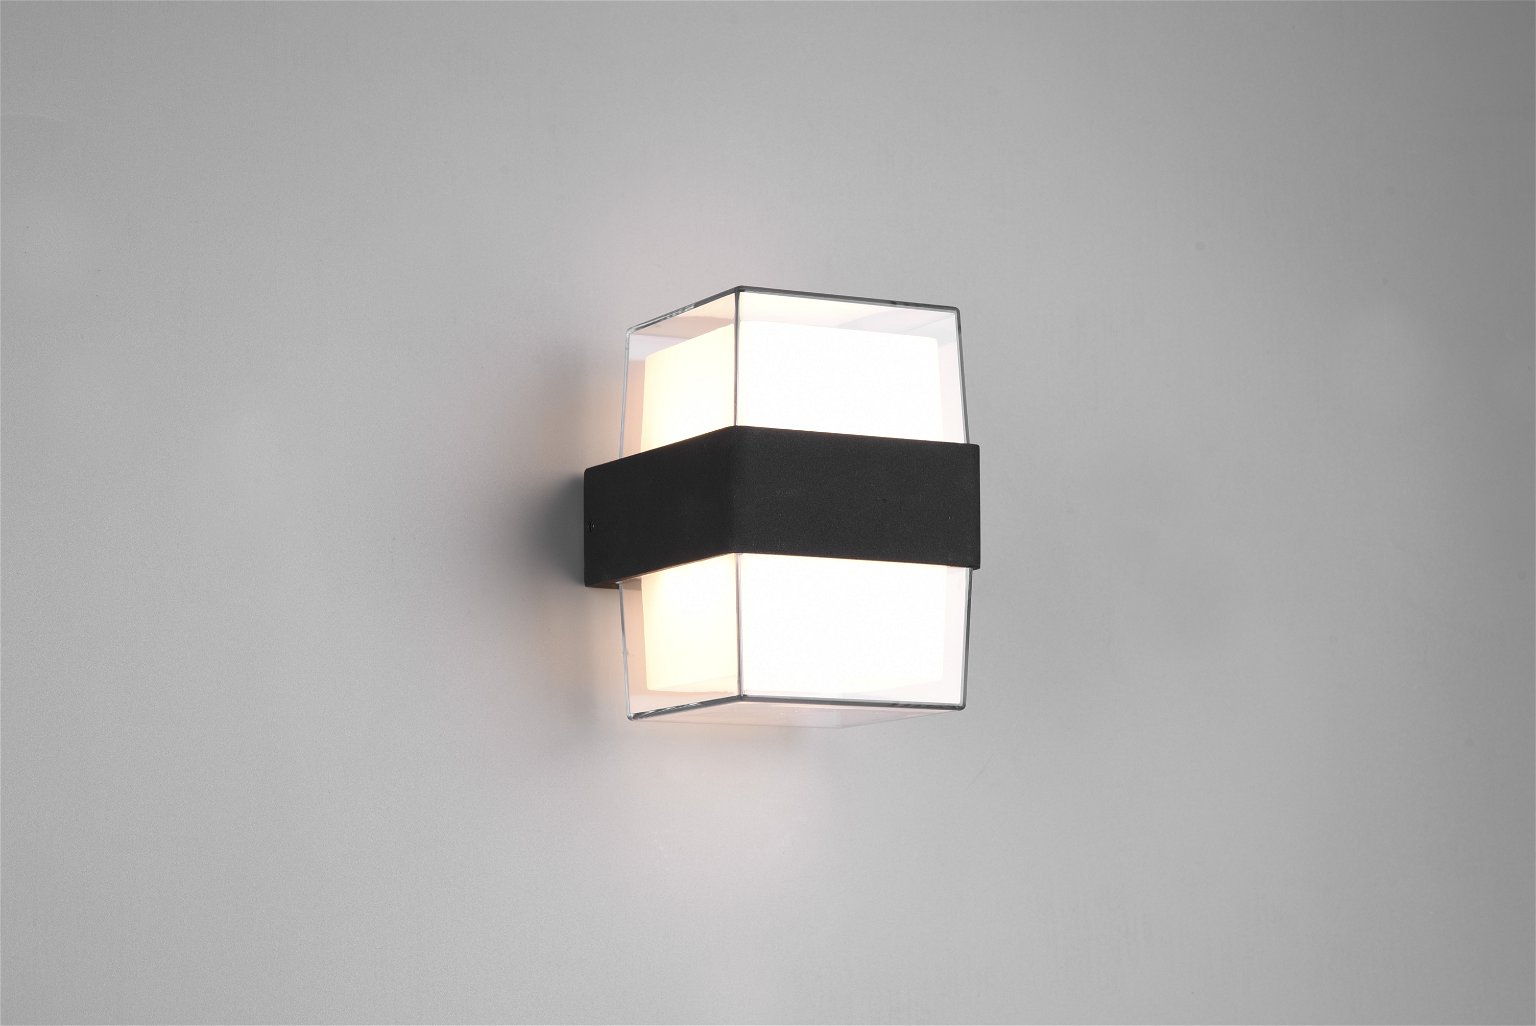 Sieninis LED lauko šviestuvas REALITY  Molina, IP54, 2x4,6W,3000K, 2x550lm, antracito sp., 9 x h13cm - 2